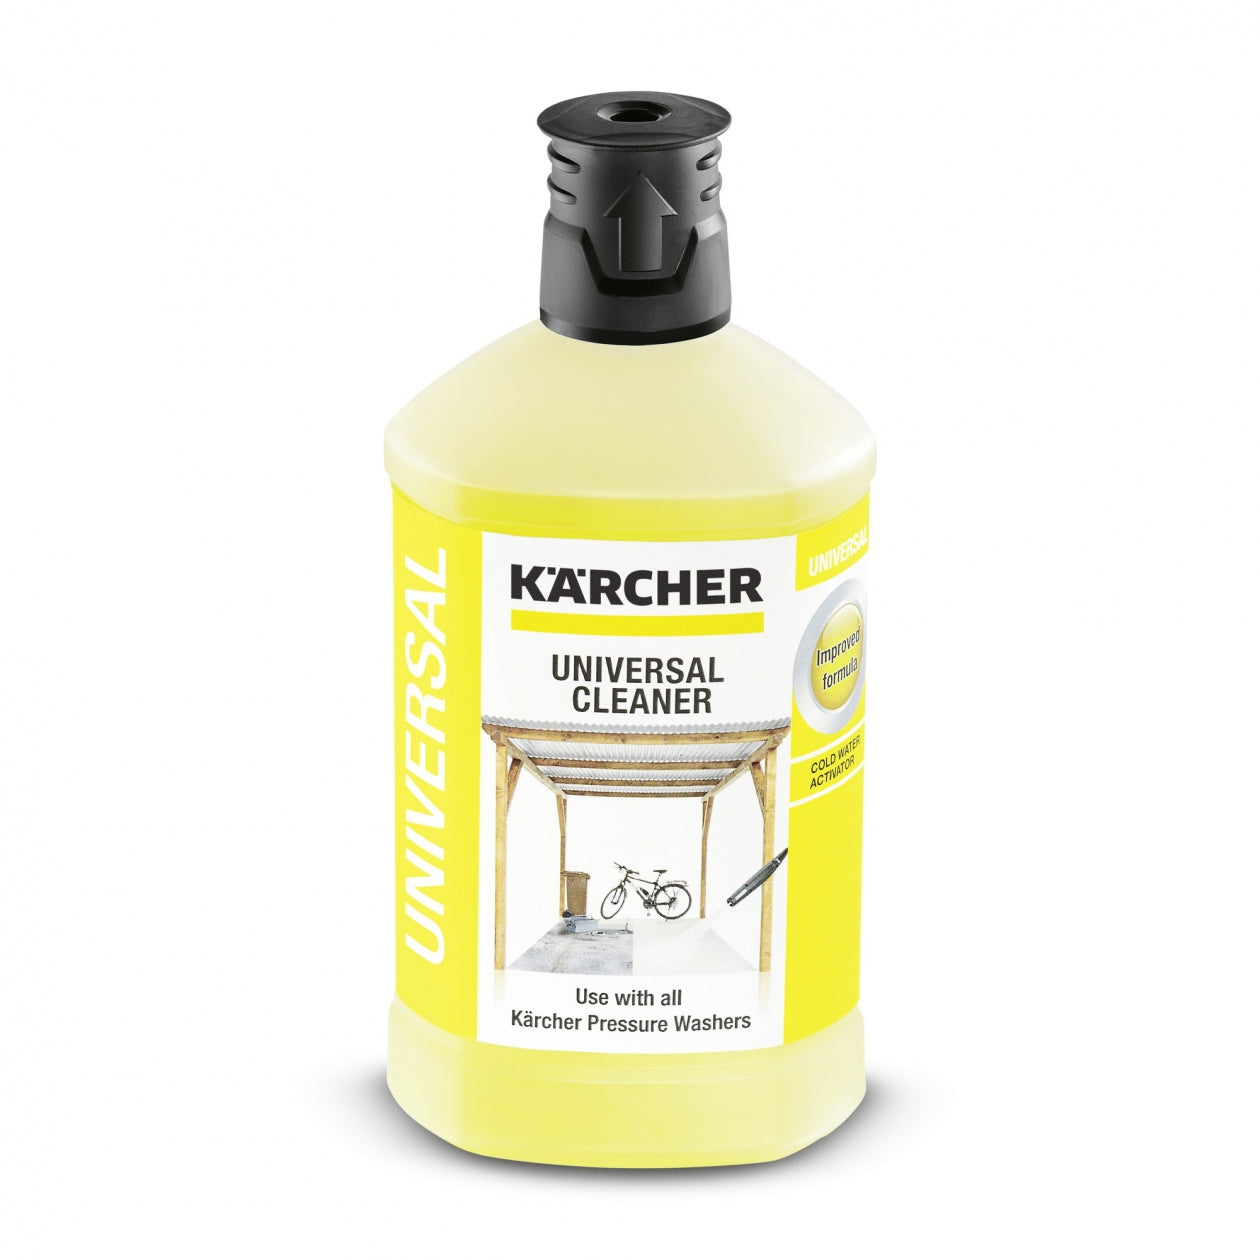 Karcher Universal Cleaner (1 Liter)